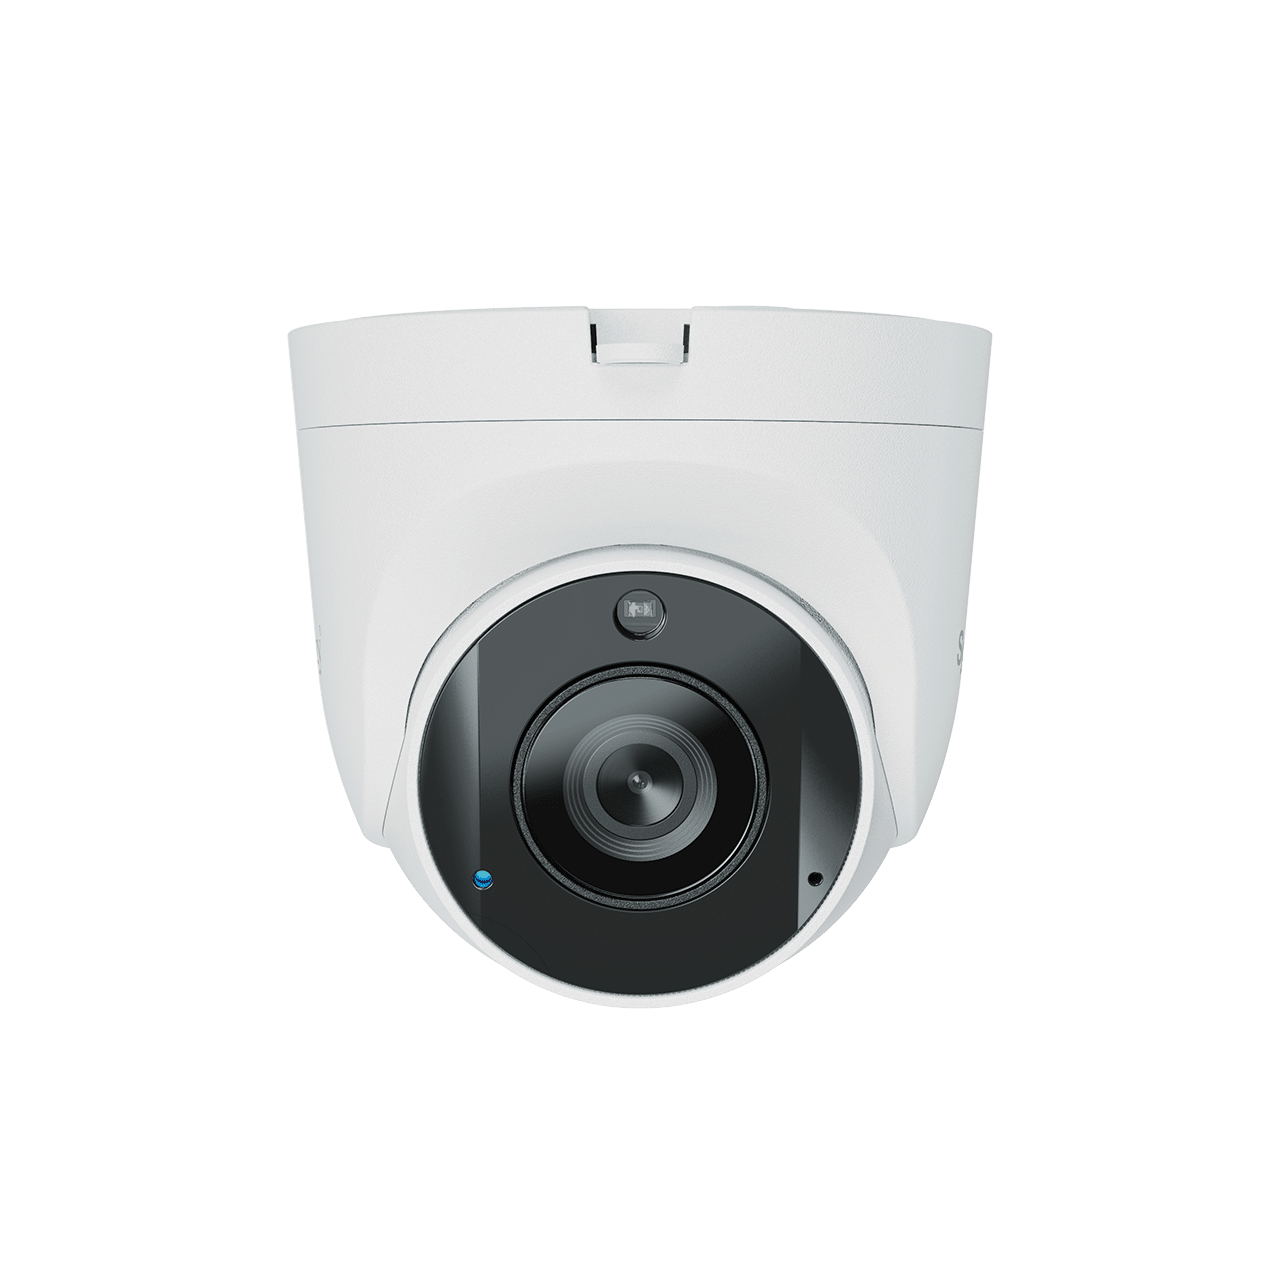 Synology (BC500) Surveillance/Network Cameras – Network Hardwares